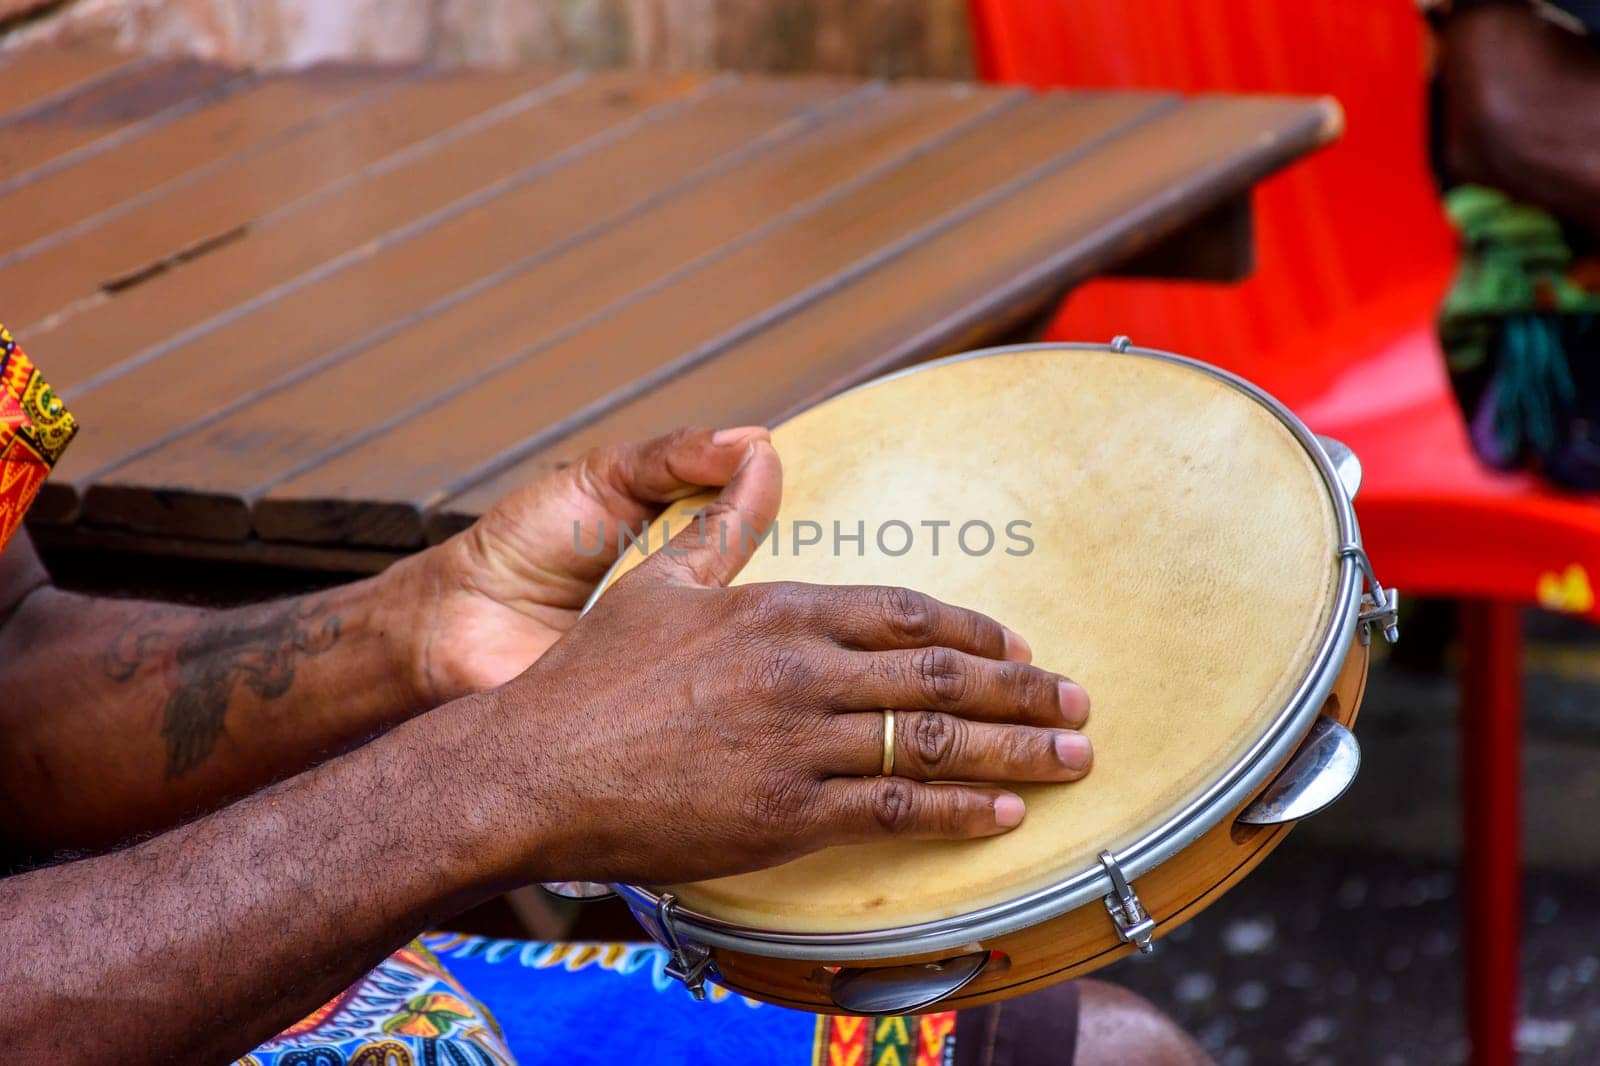 Brazilian samba performance with musician playing tambourine by Fred_Pinheiro